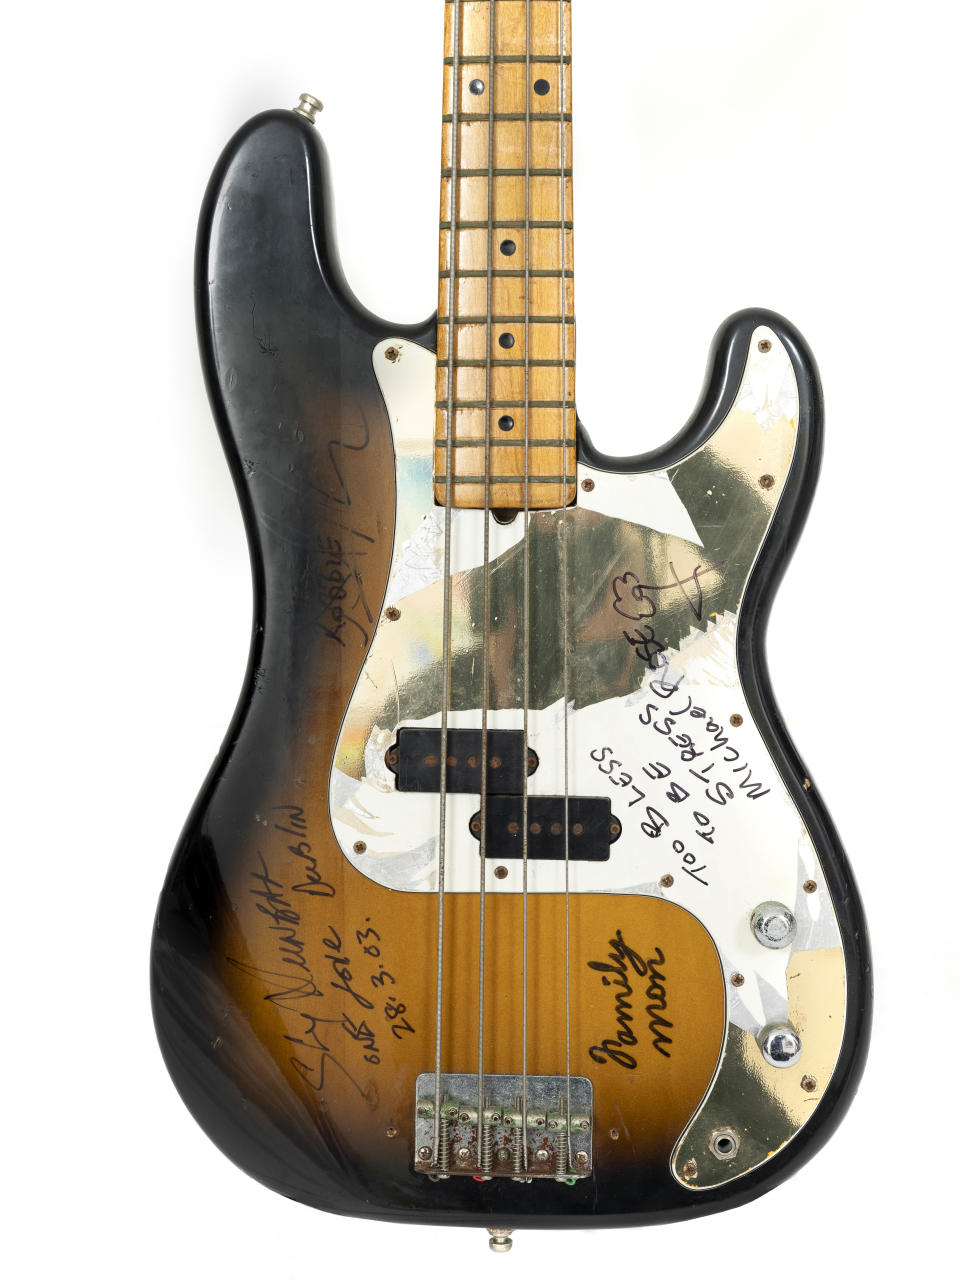 Phil Lynott’s bass guitar from the Chinatown album era (Robert Malone/PA)